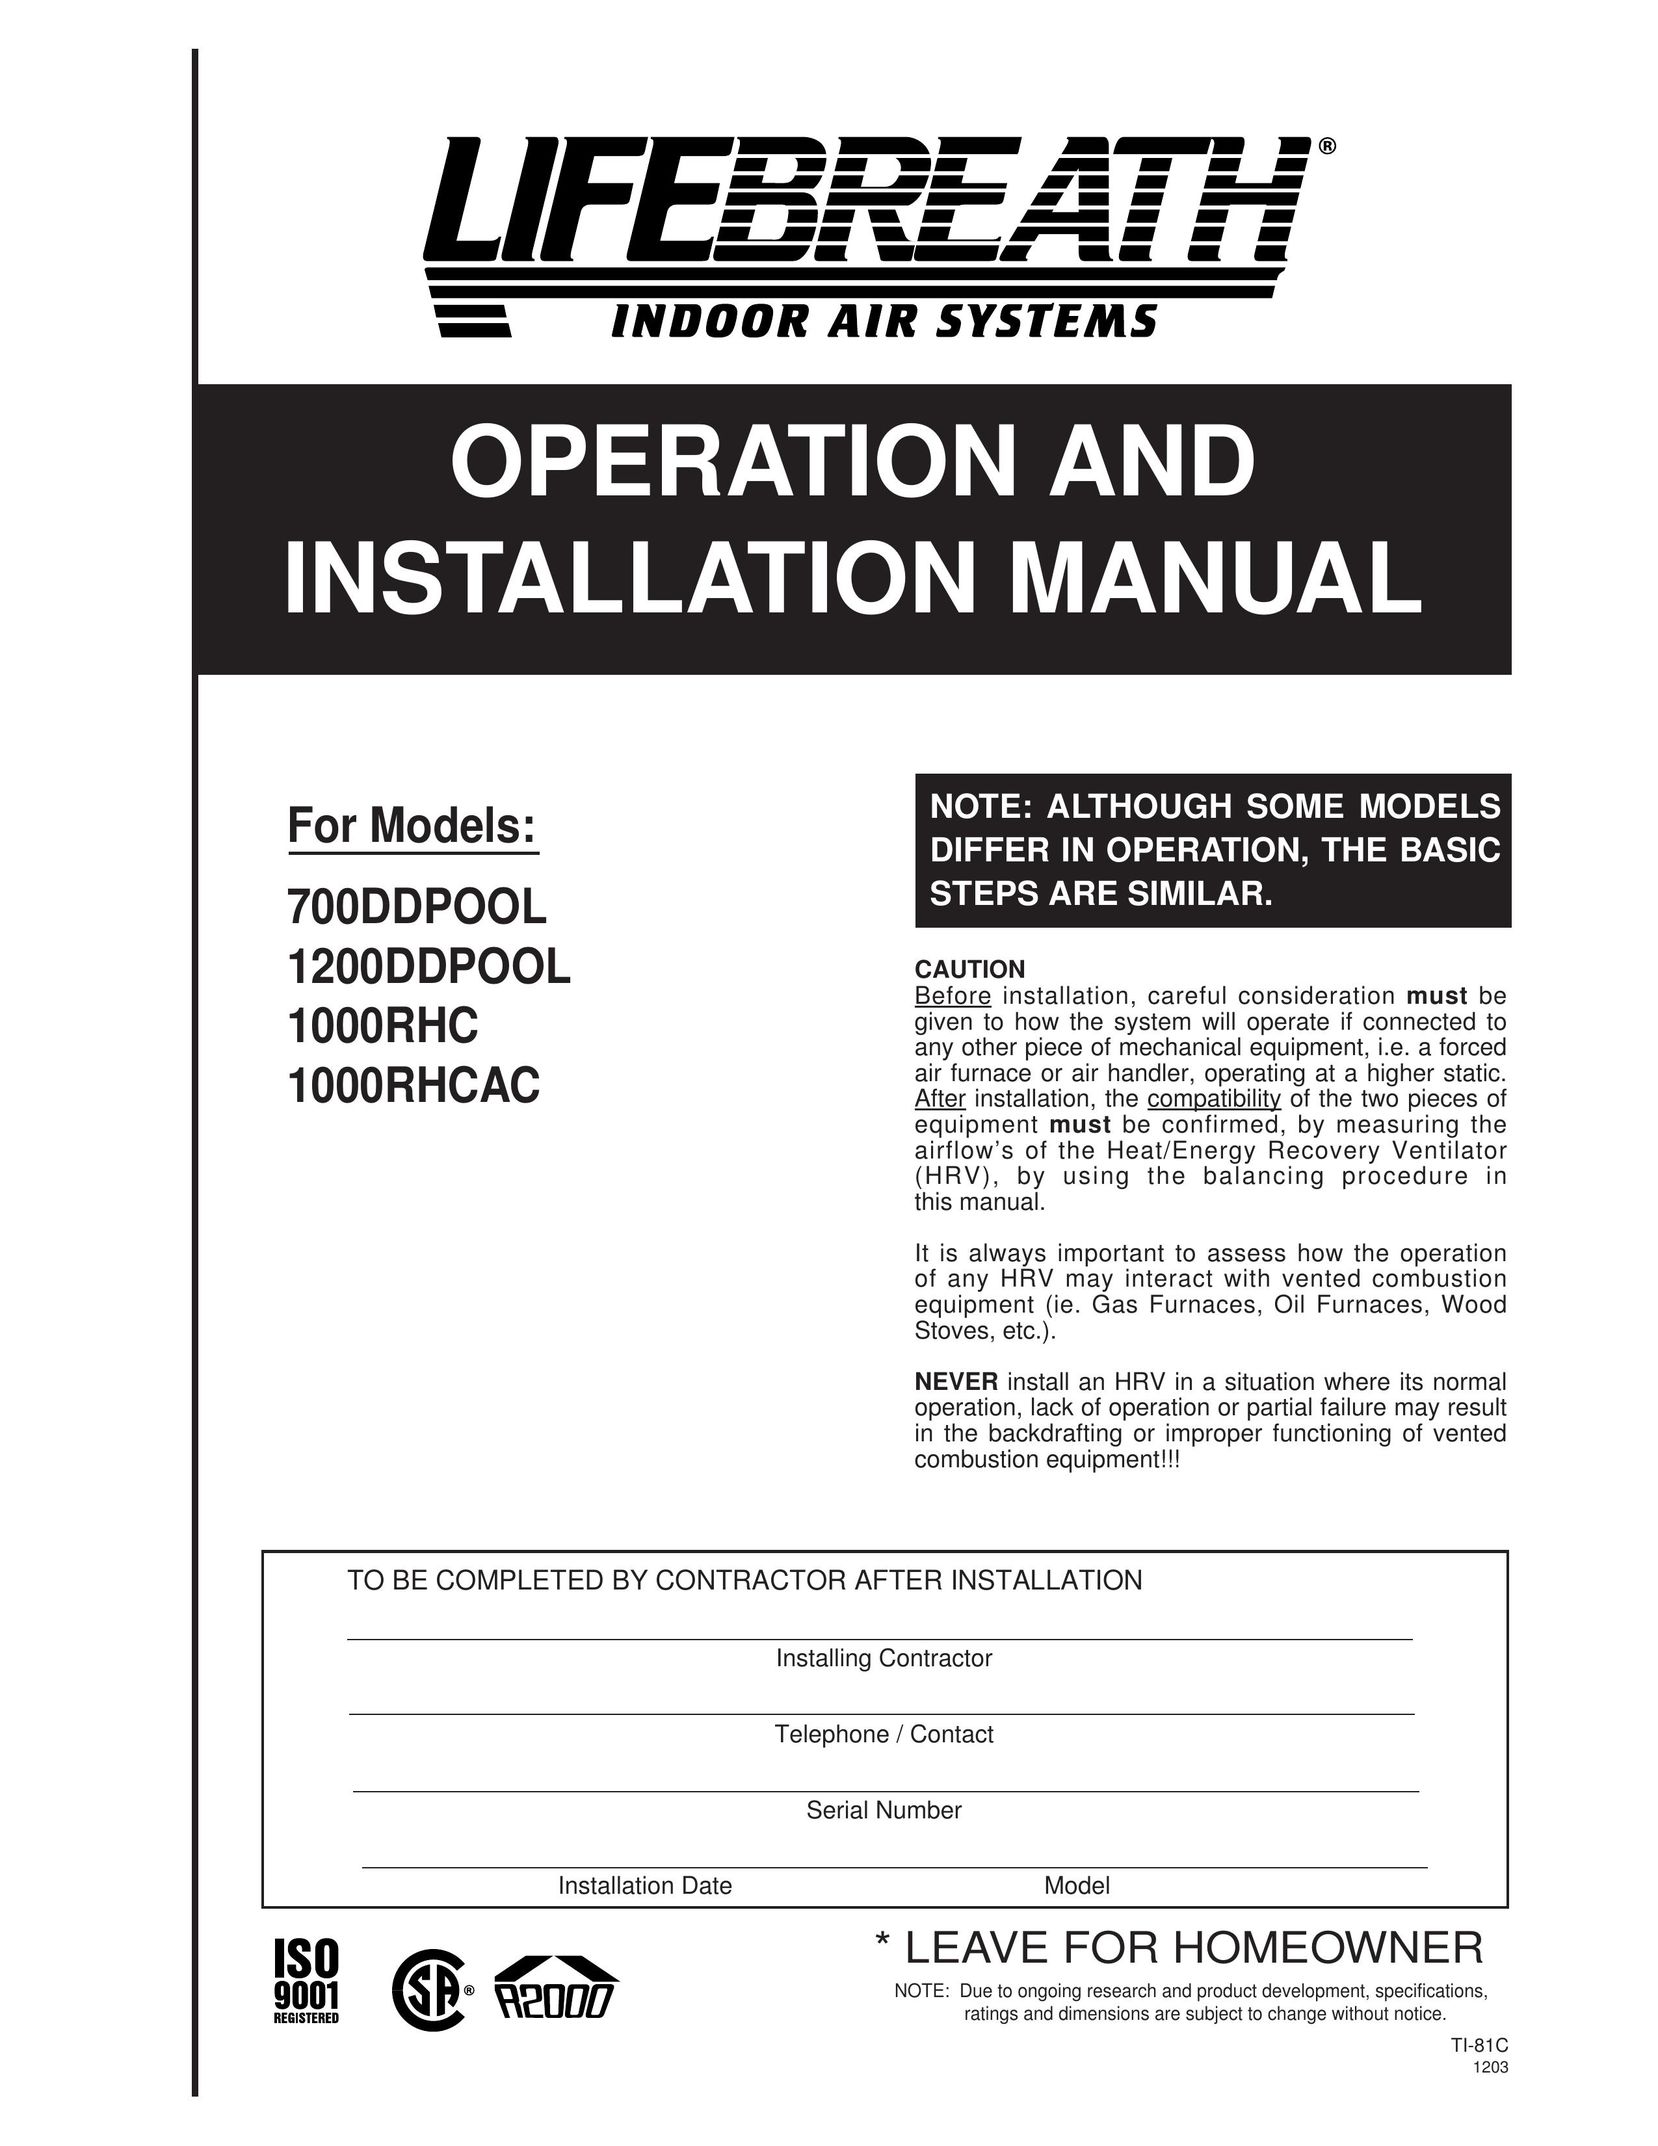 Lifebreath 1200DDPOOL Air Cleaner User Manual